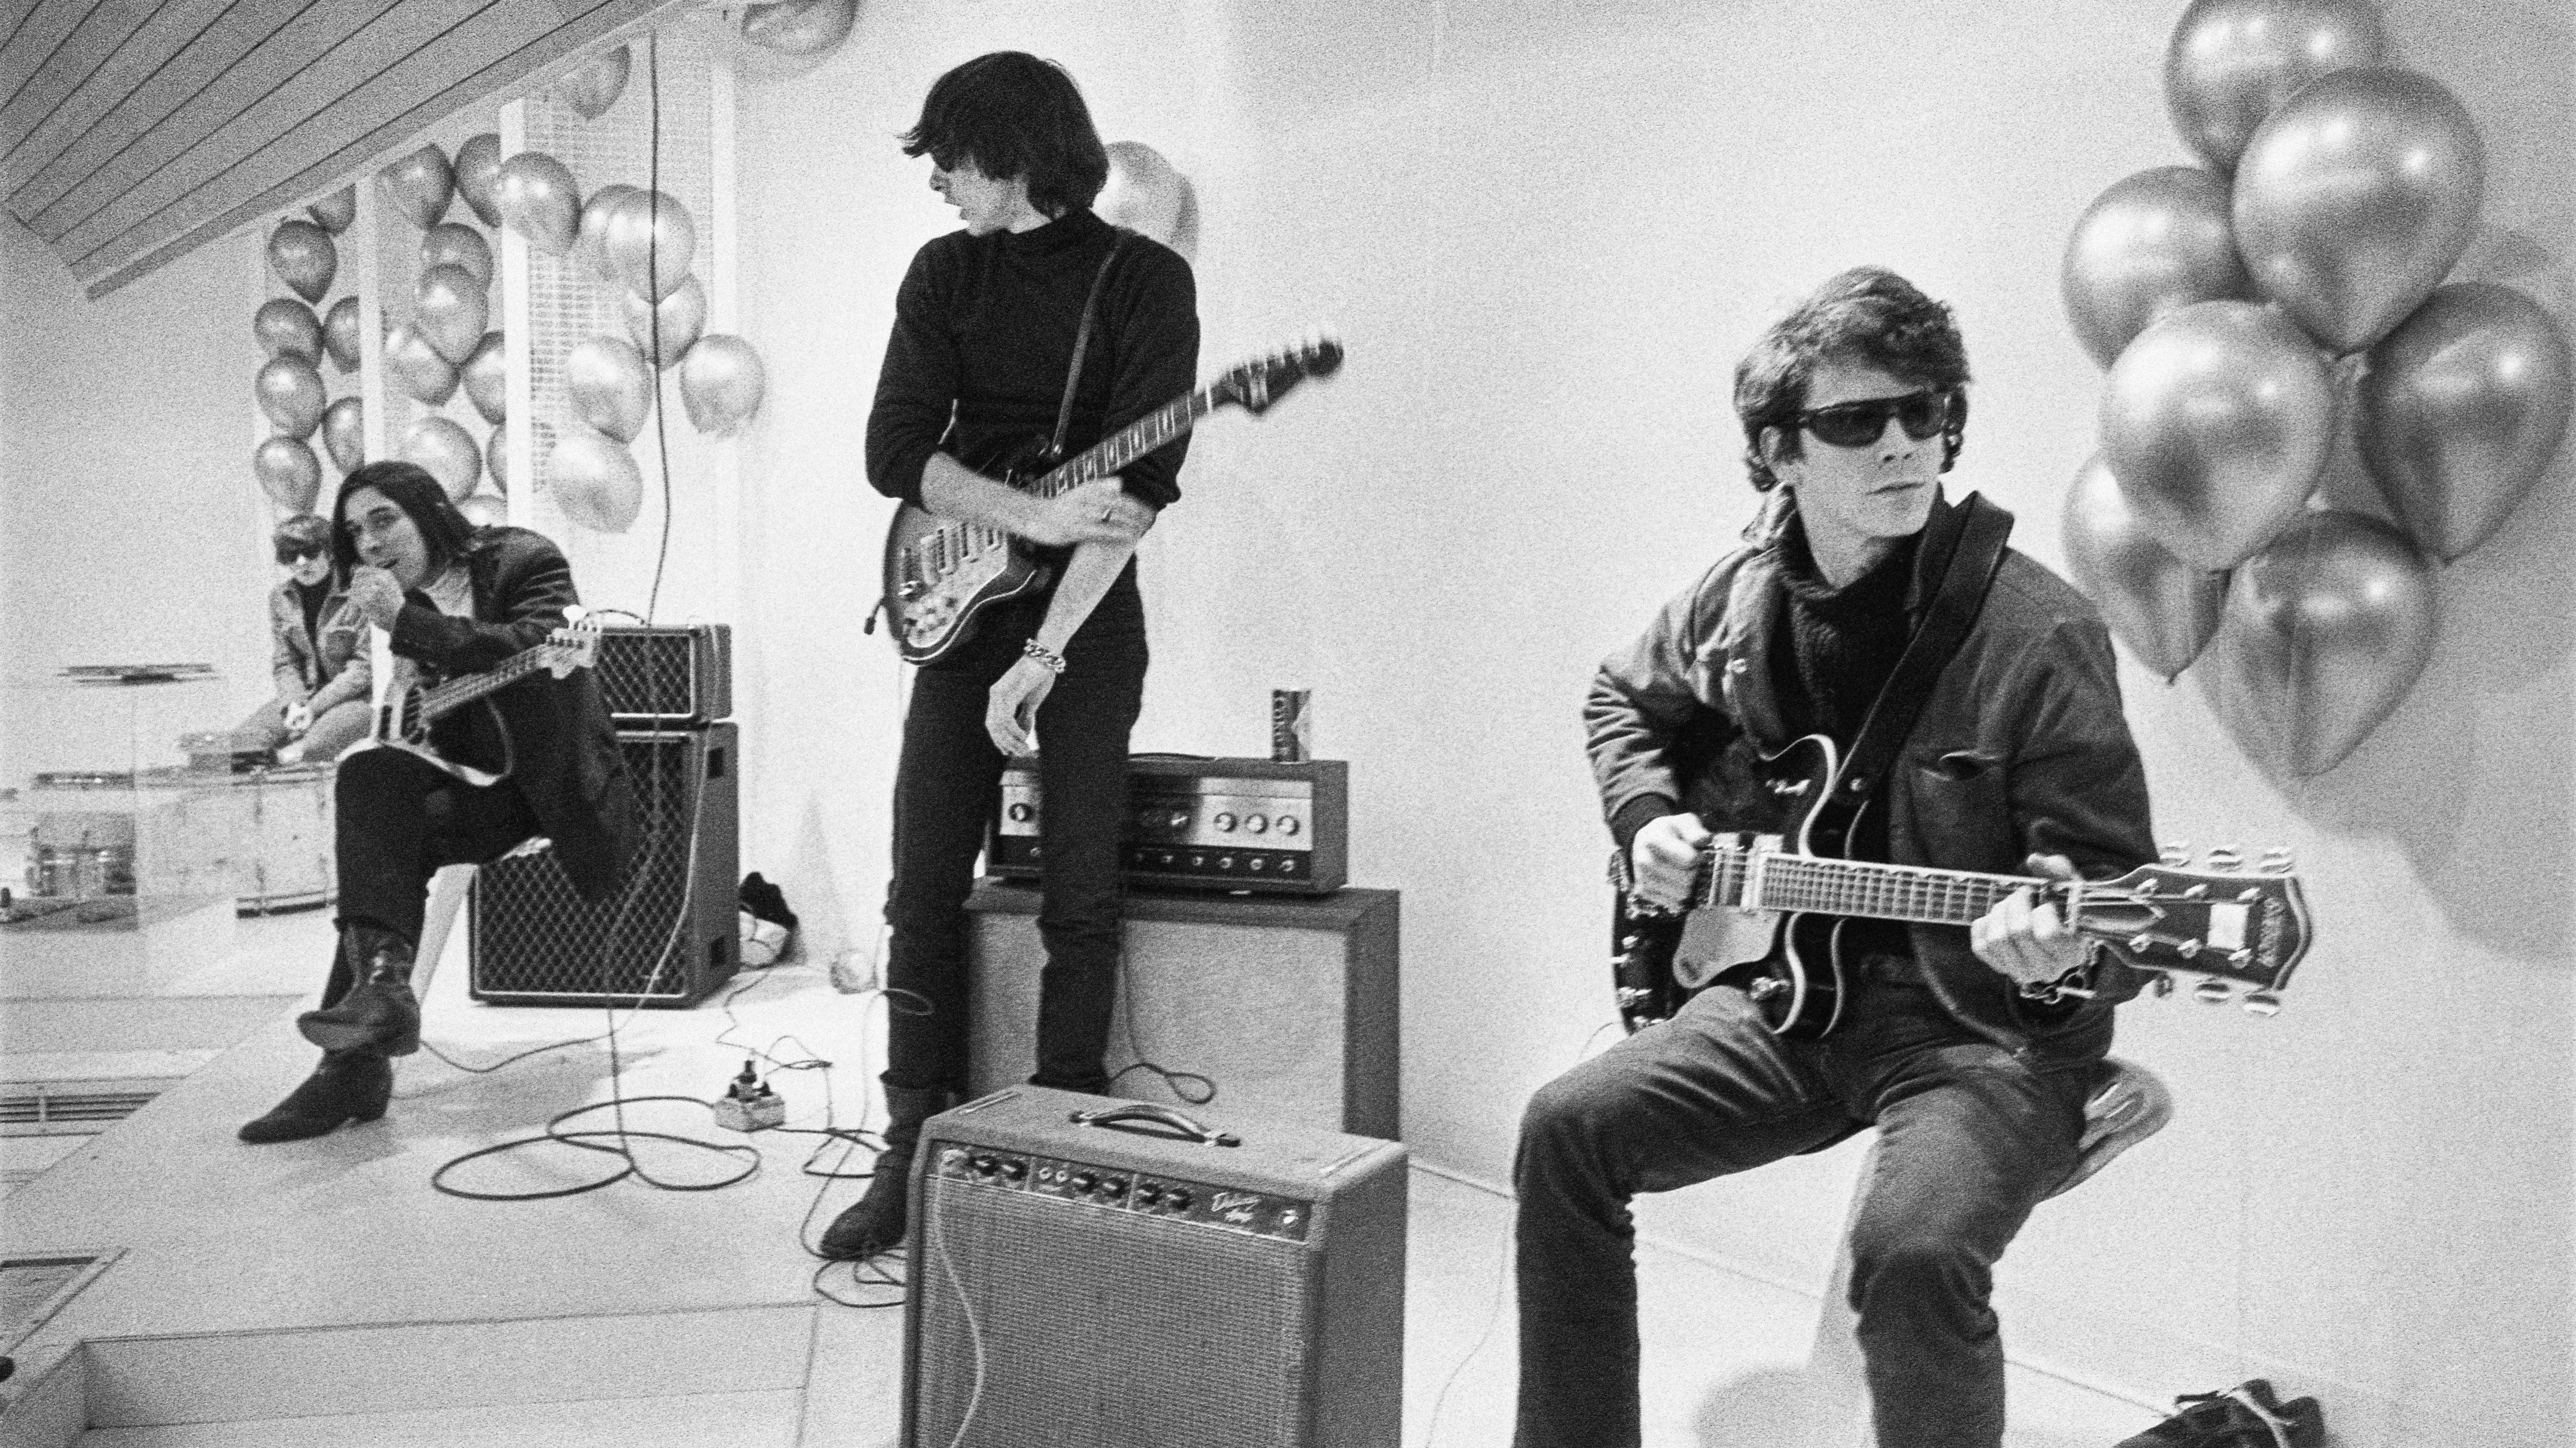 Todd Haynes captures the spirit of The Velvet Underground in an exhilarating new rock doc